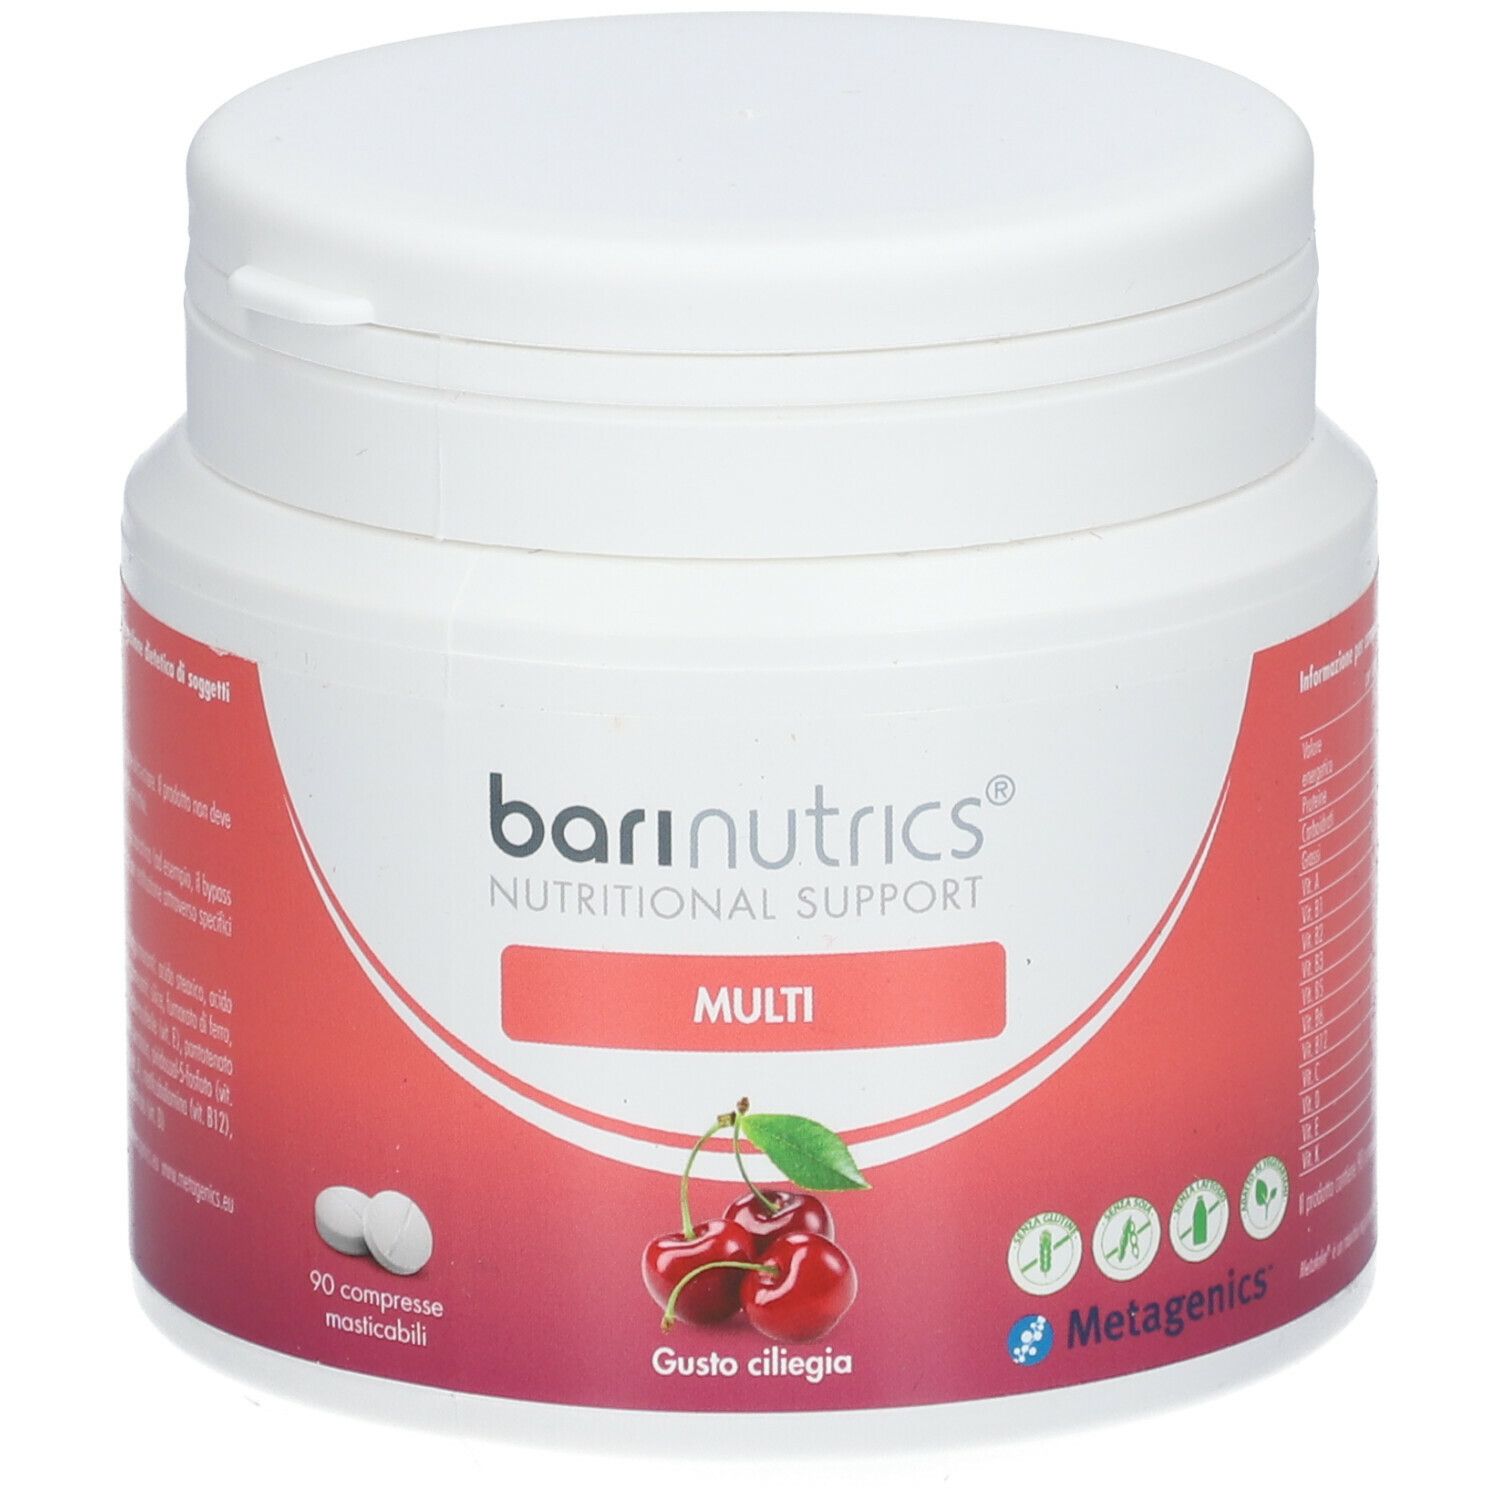 Barinutrics® Multi compresse masticabili